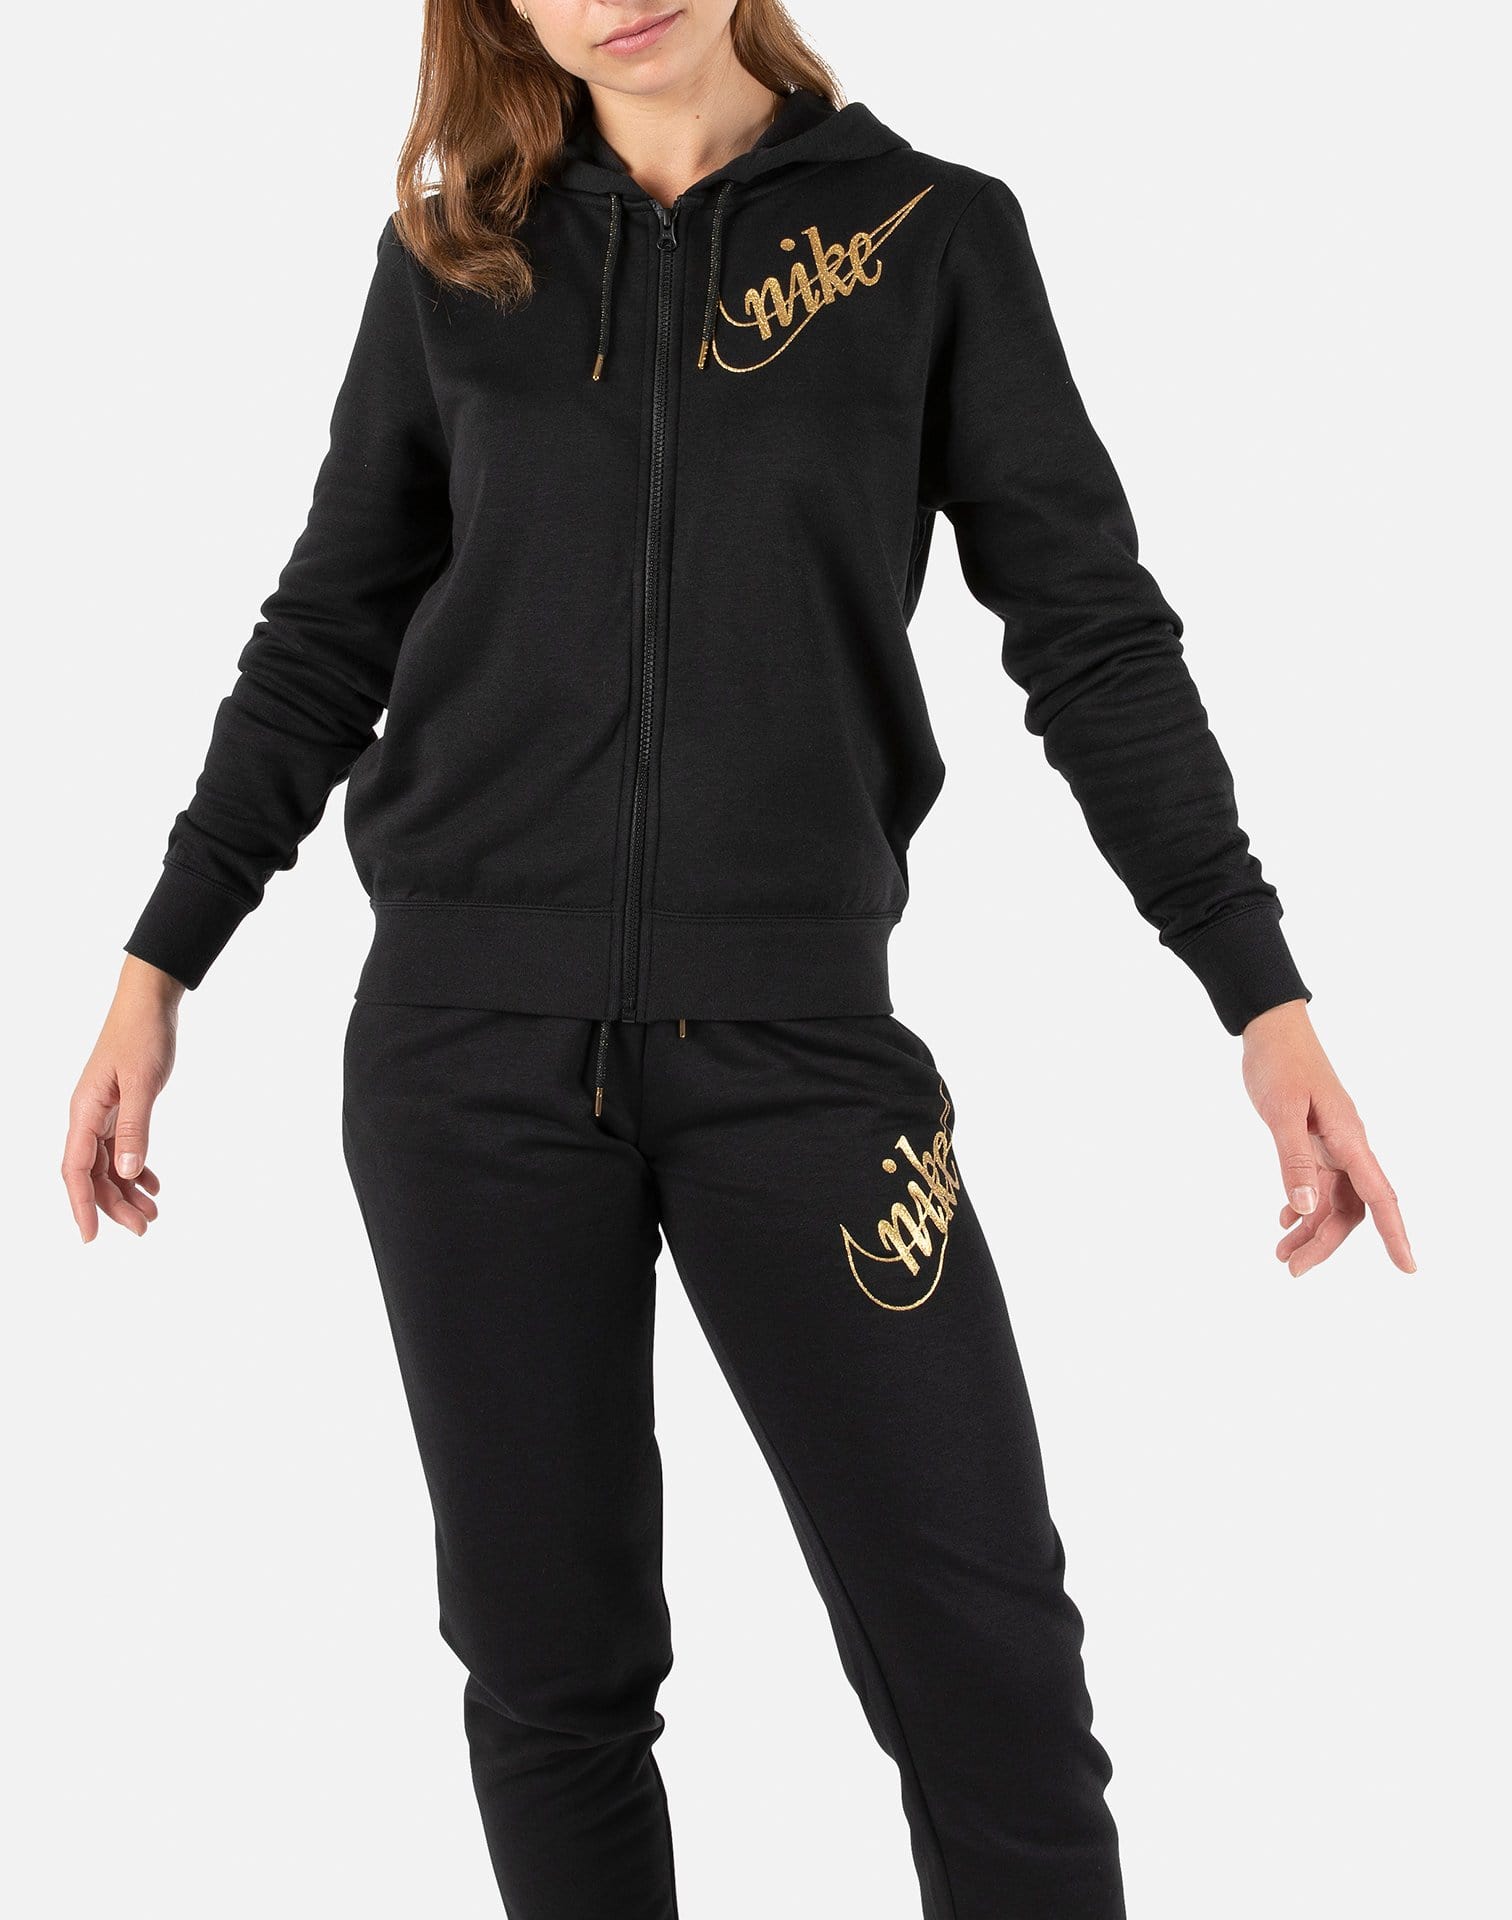 black and gold nike hoodie womens